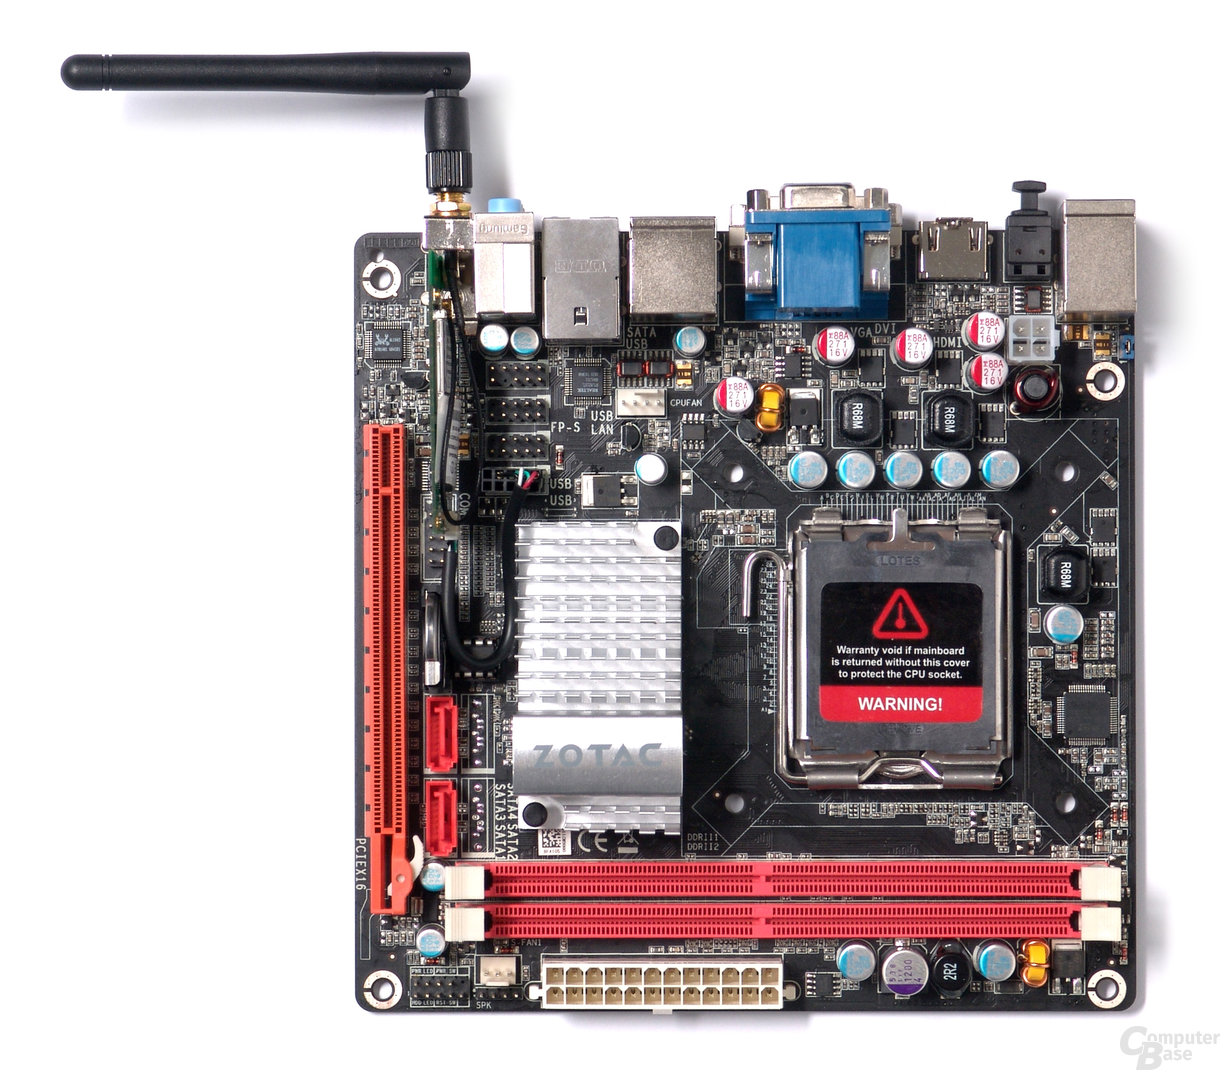 Zotac GeForce 9300-ITX WIFI